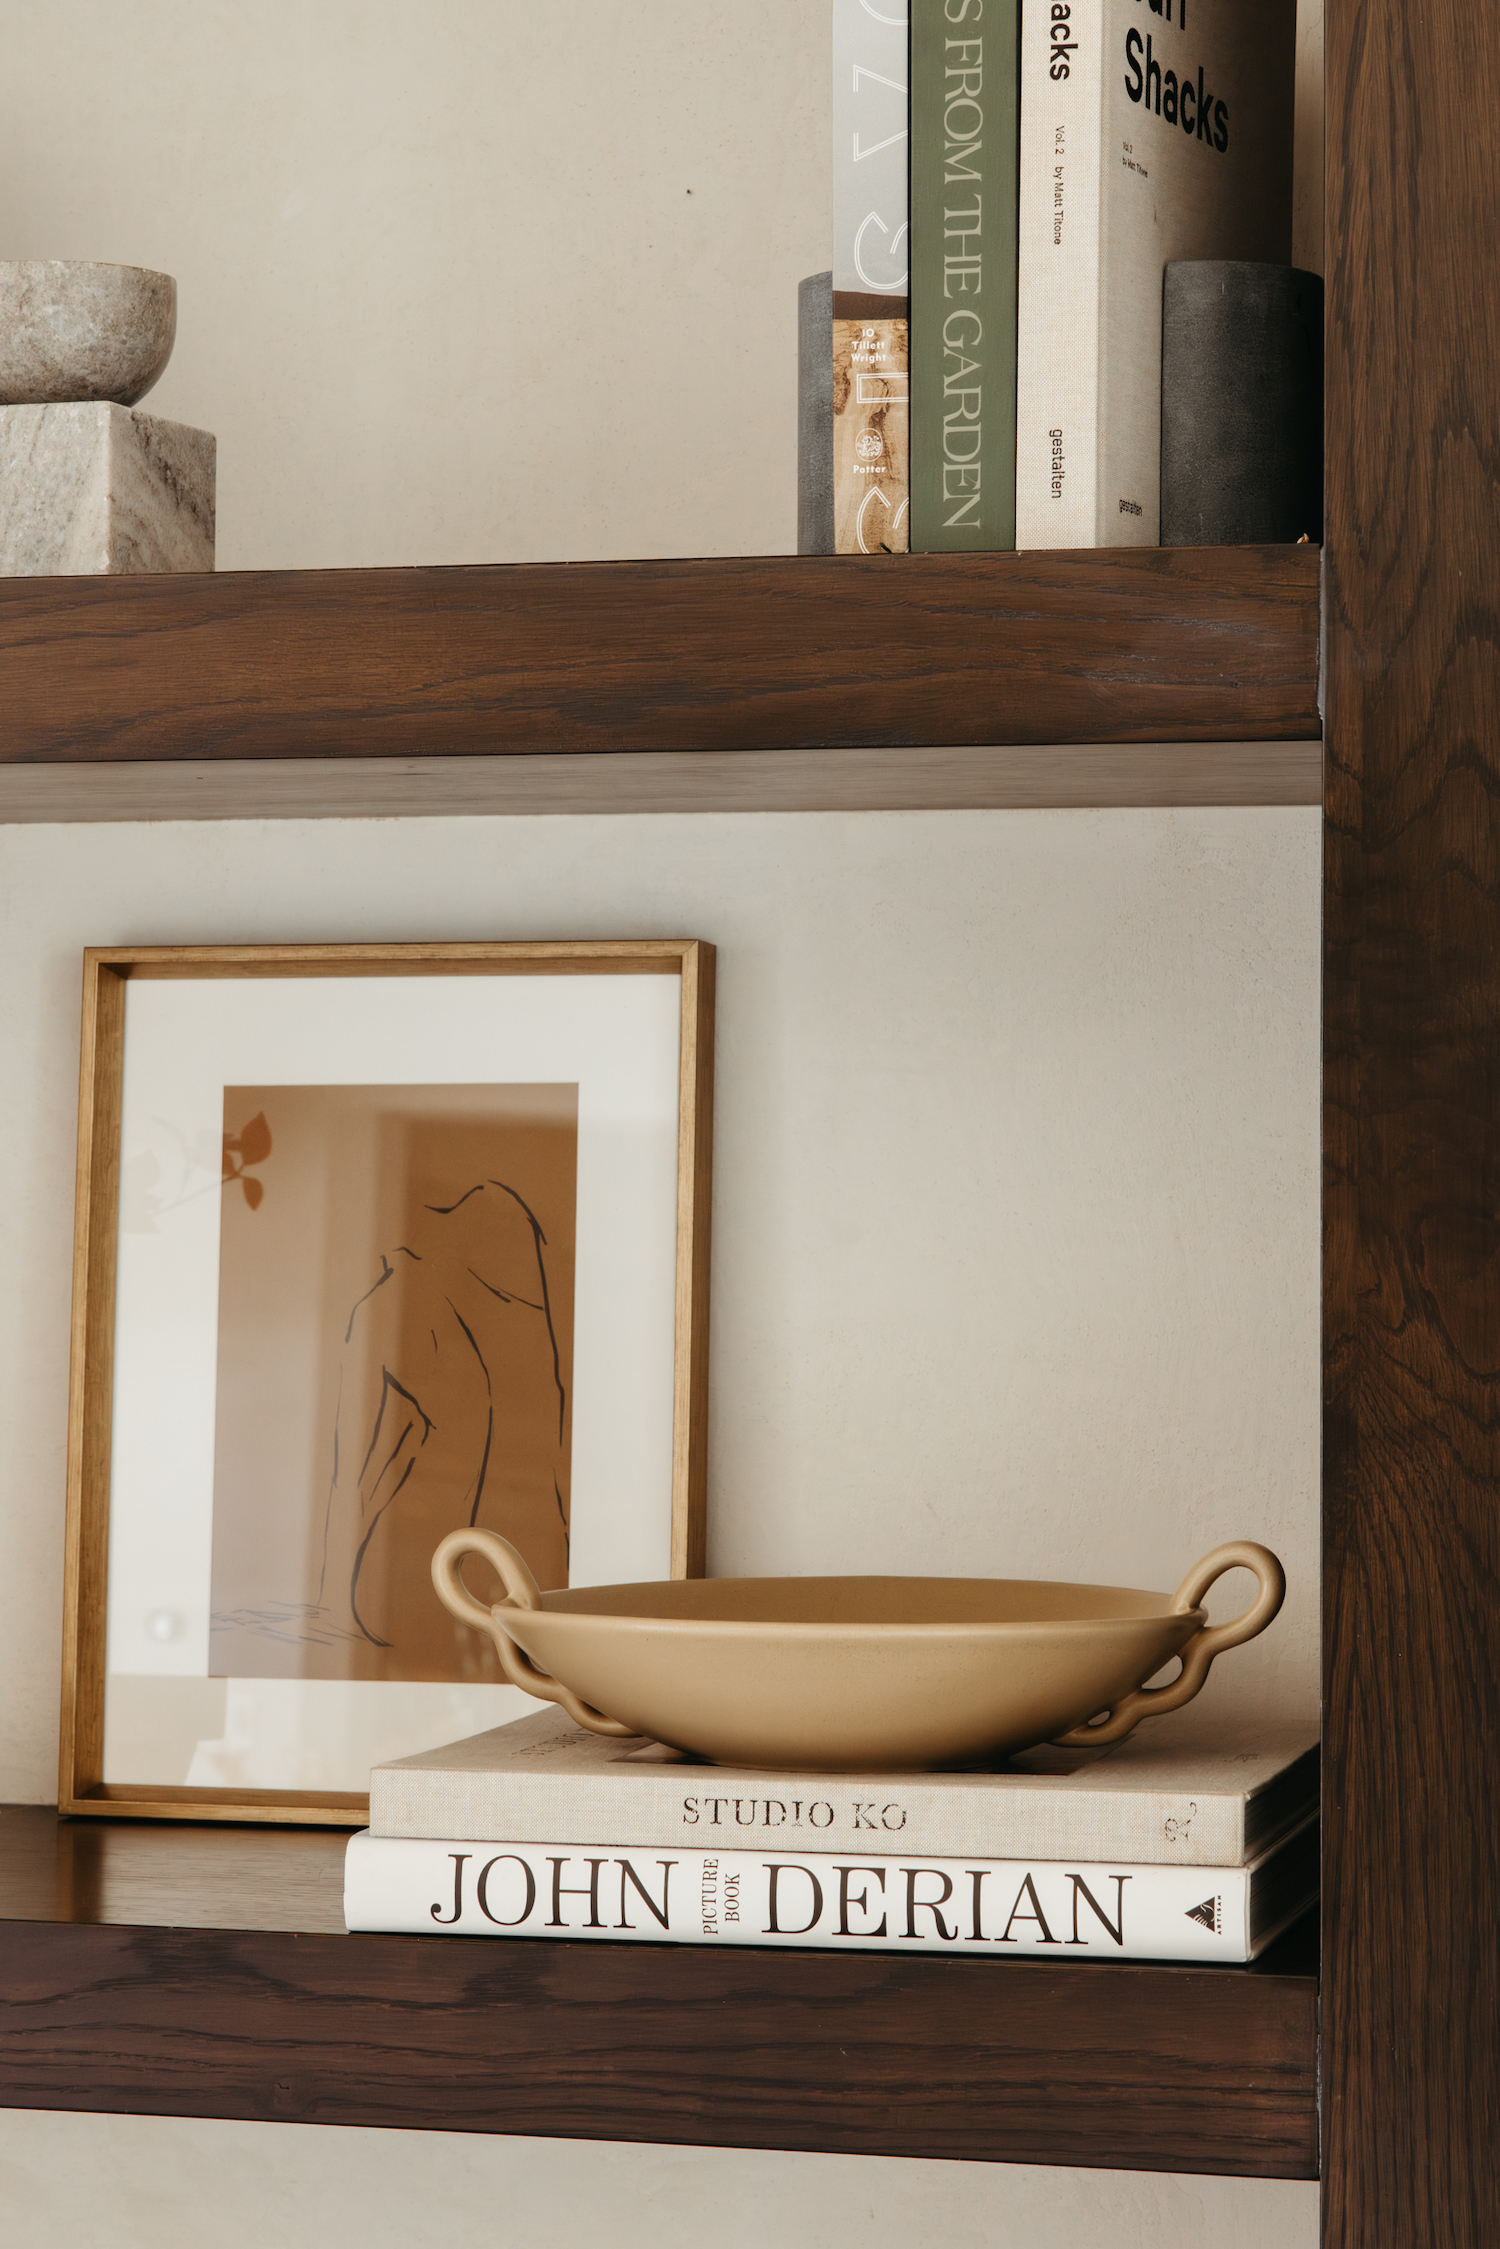 how to style a bookshelf, camille's living room shelves, fall decor, target, art